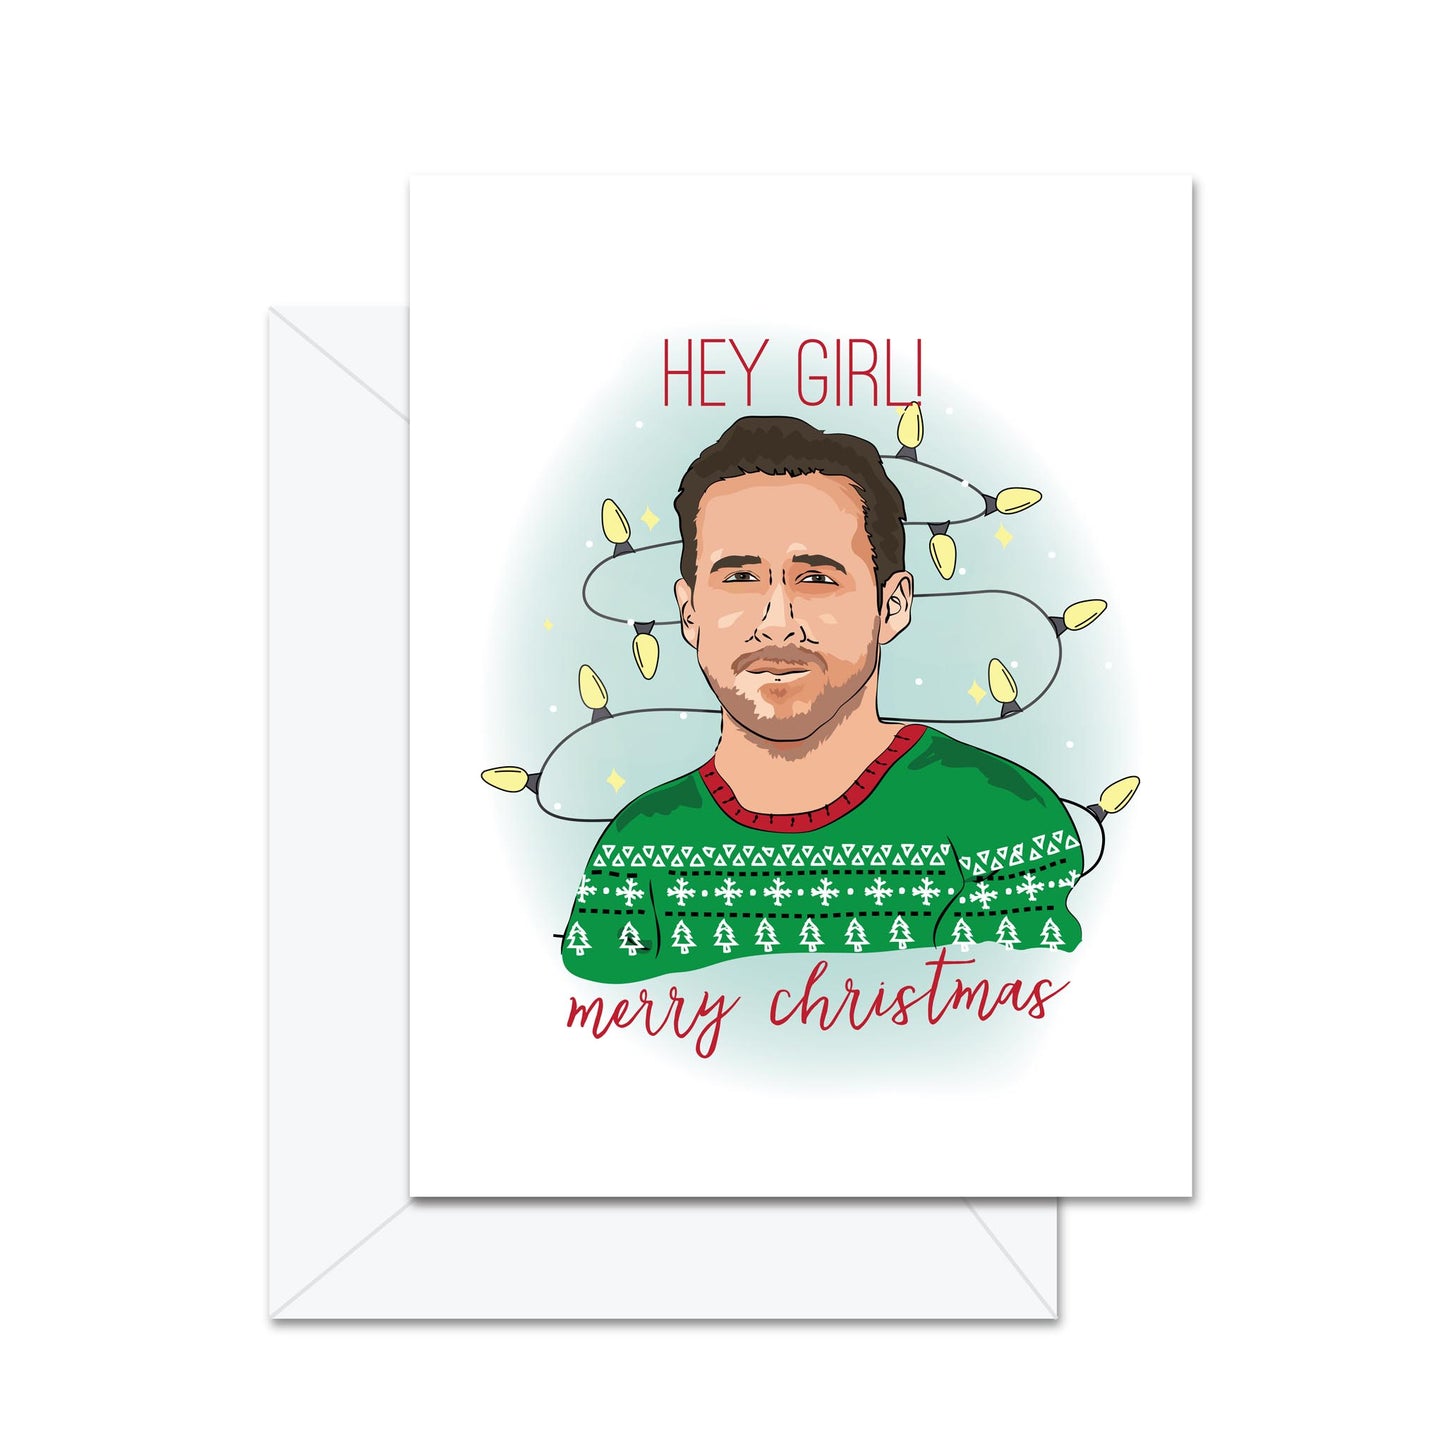 Hey Girl! Merry Christmas! - Ryan Gosling